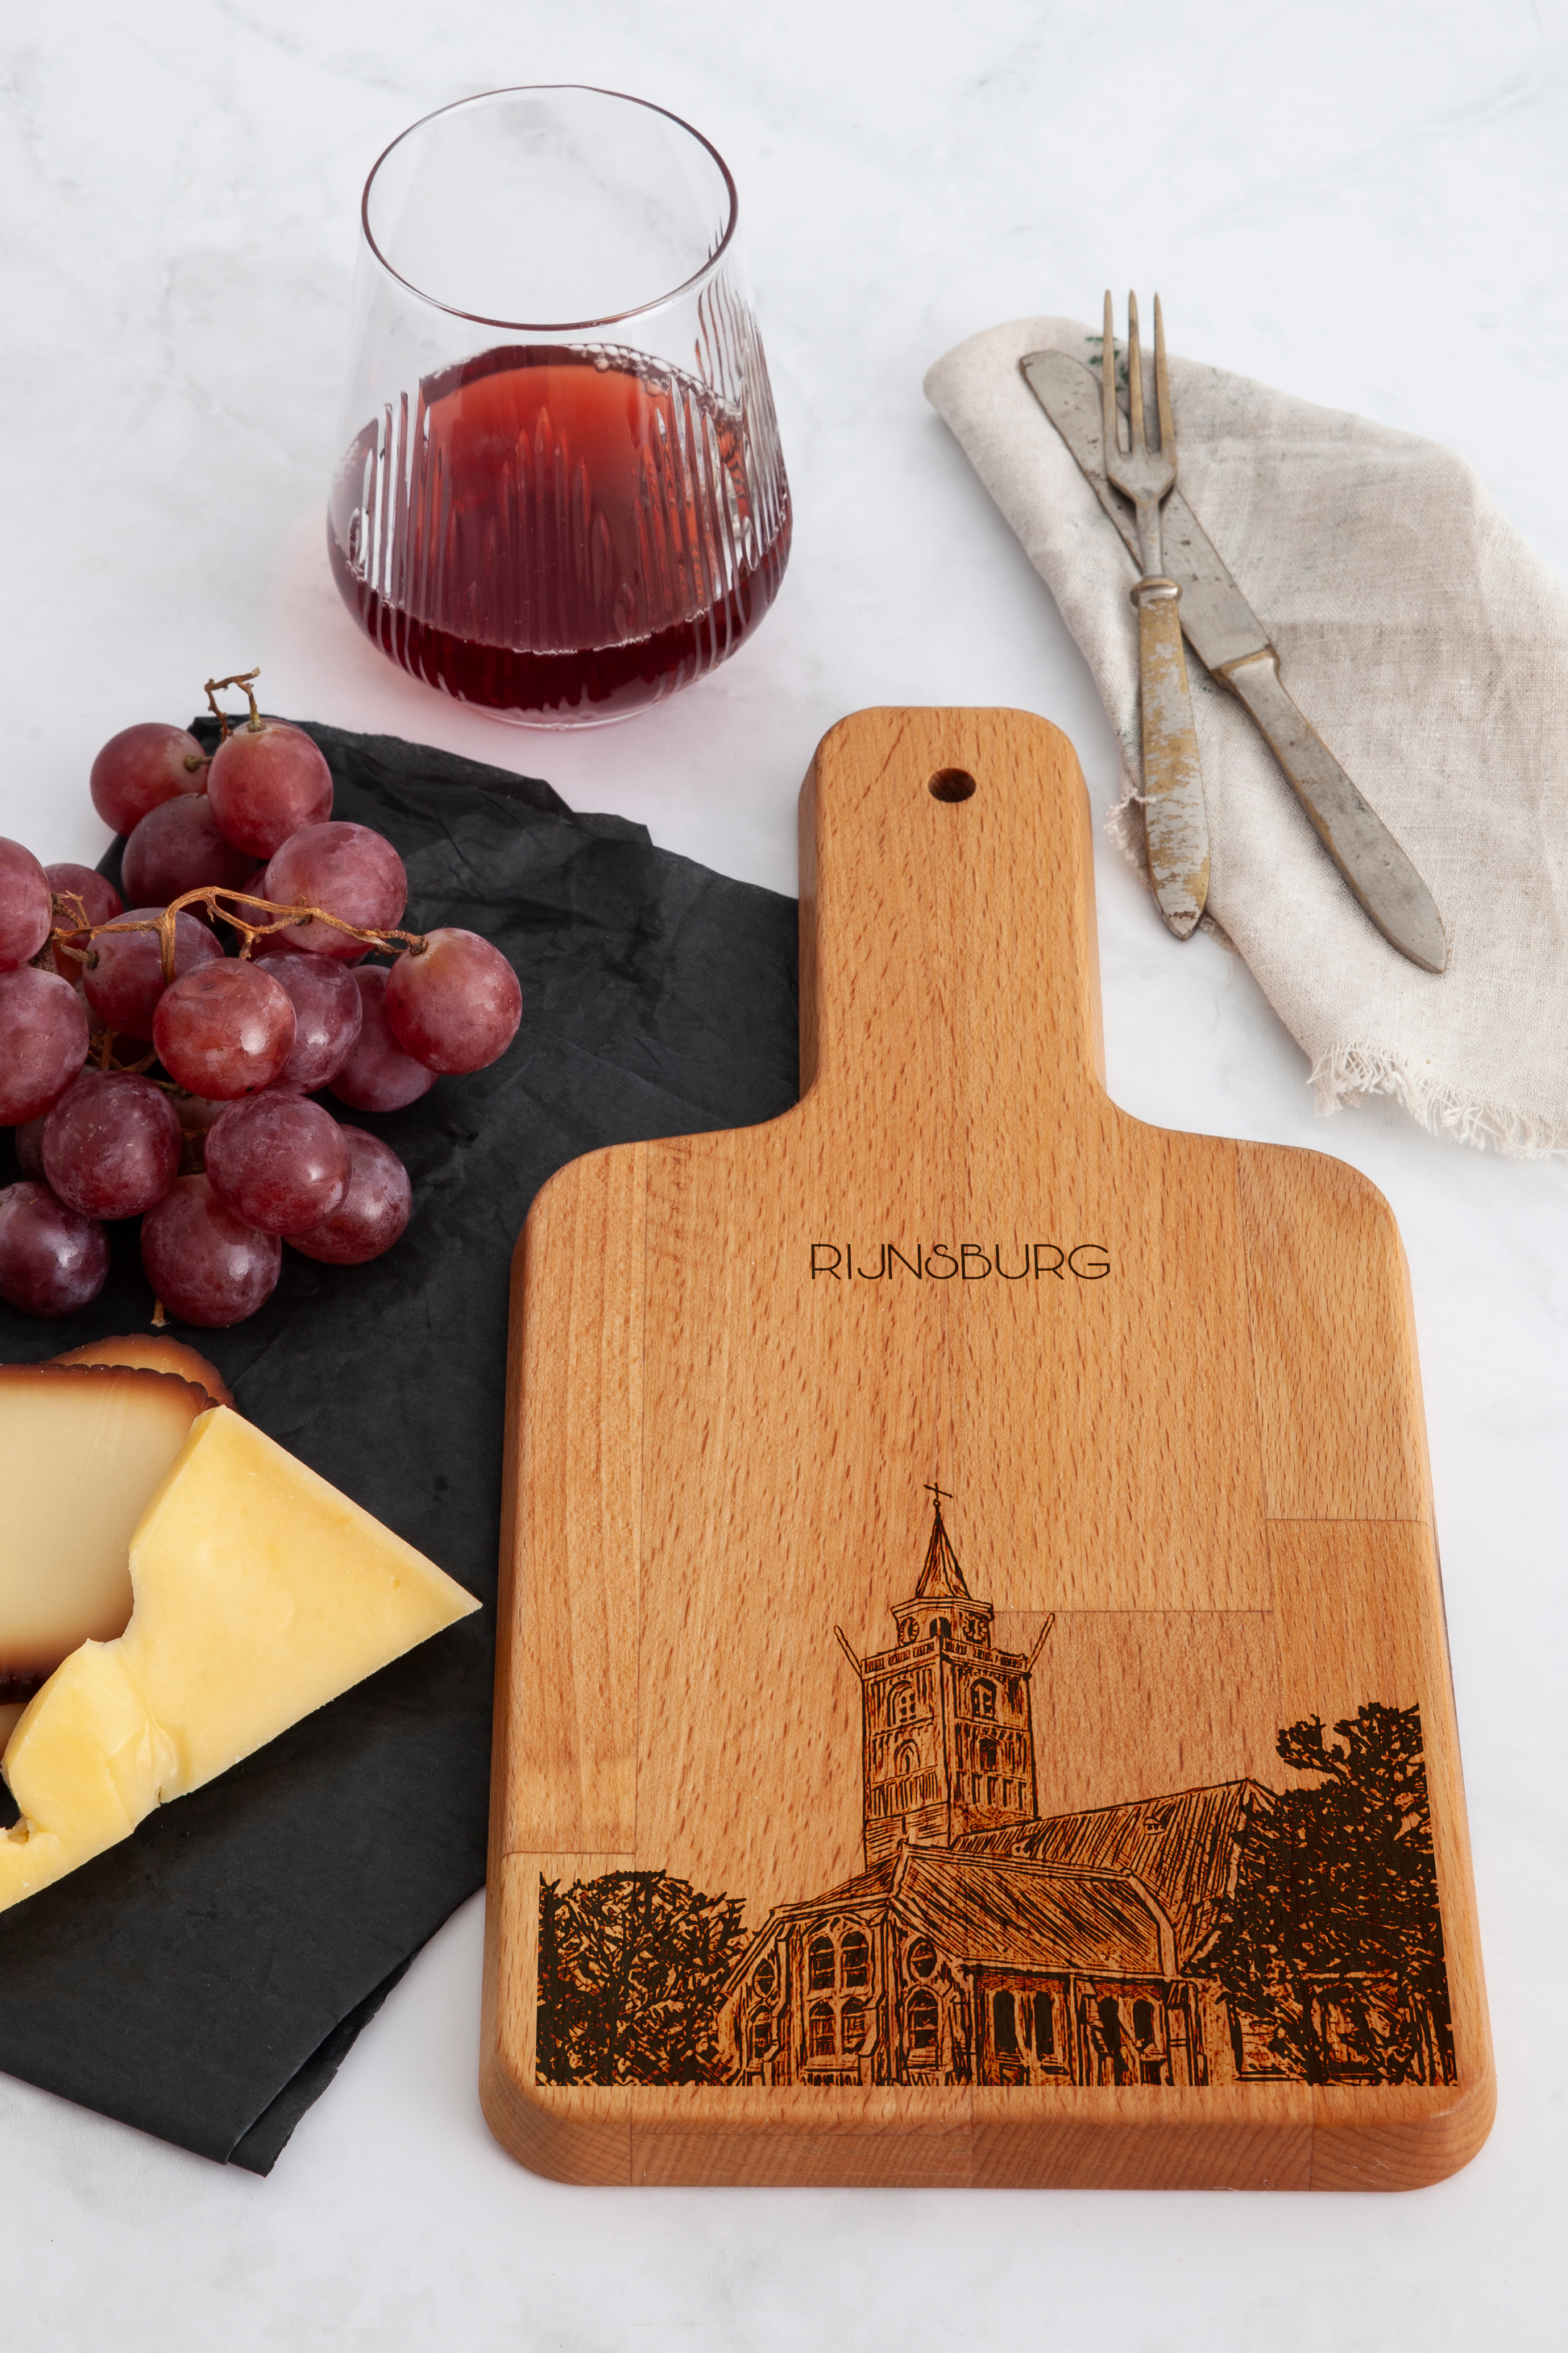 Rijnsburg, Grote Kerk, cheese board, on countertop